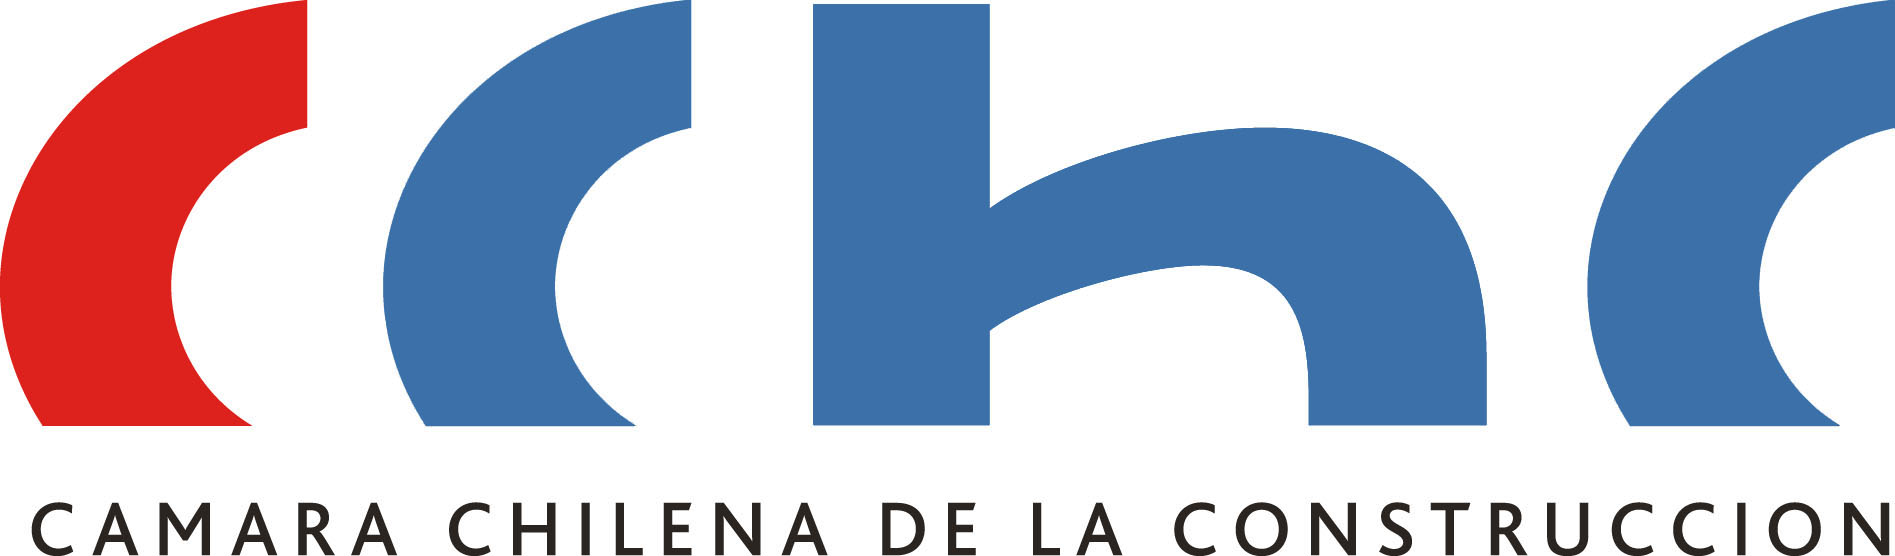 Logo-CChC3.jpg